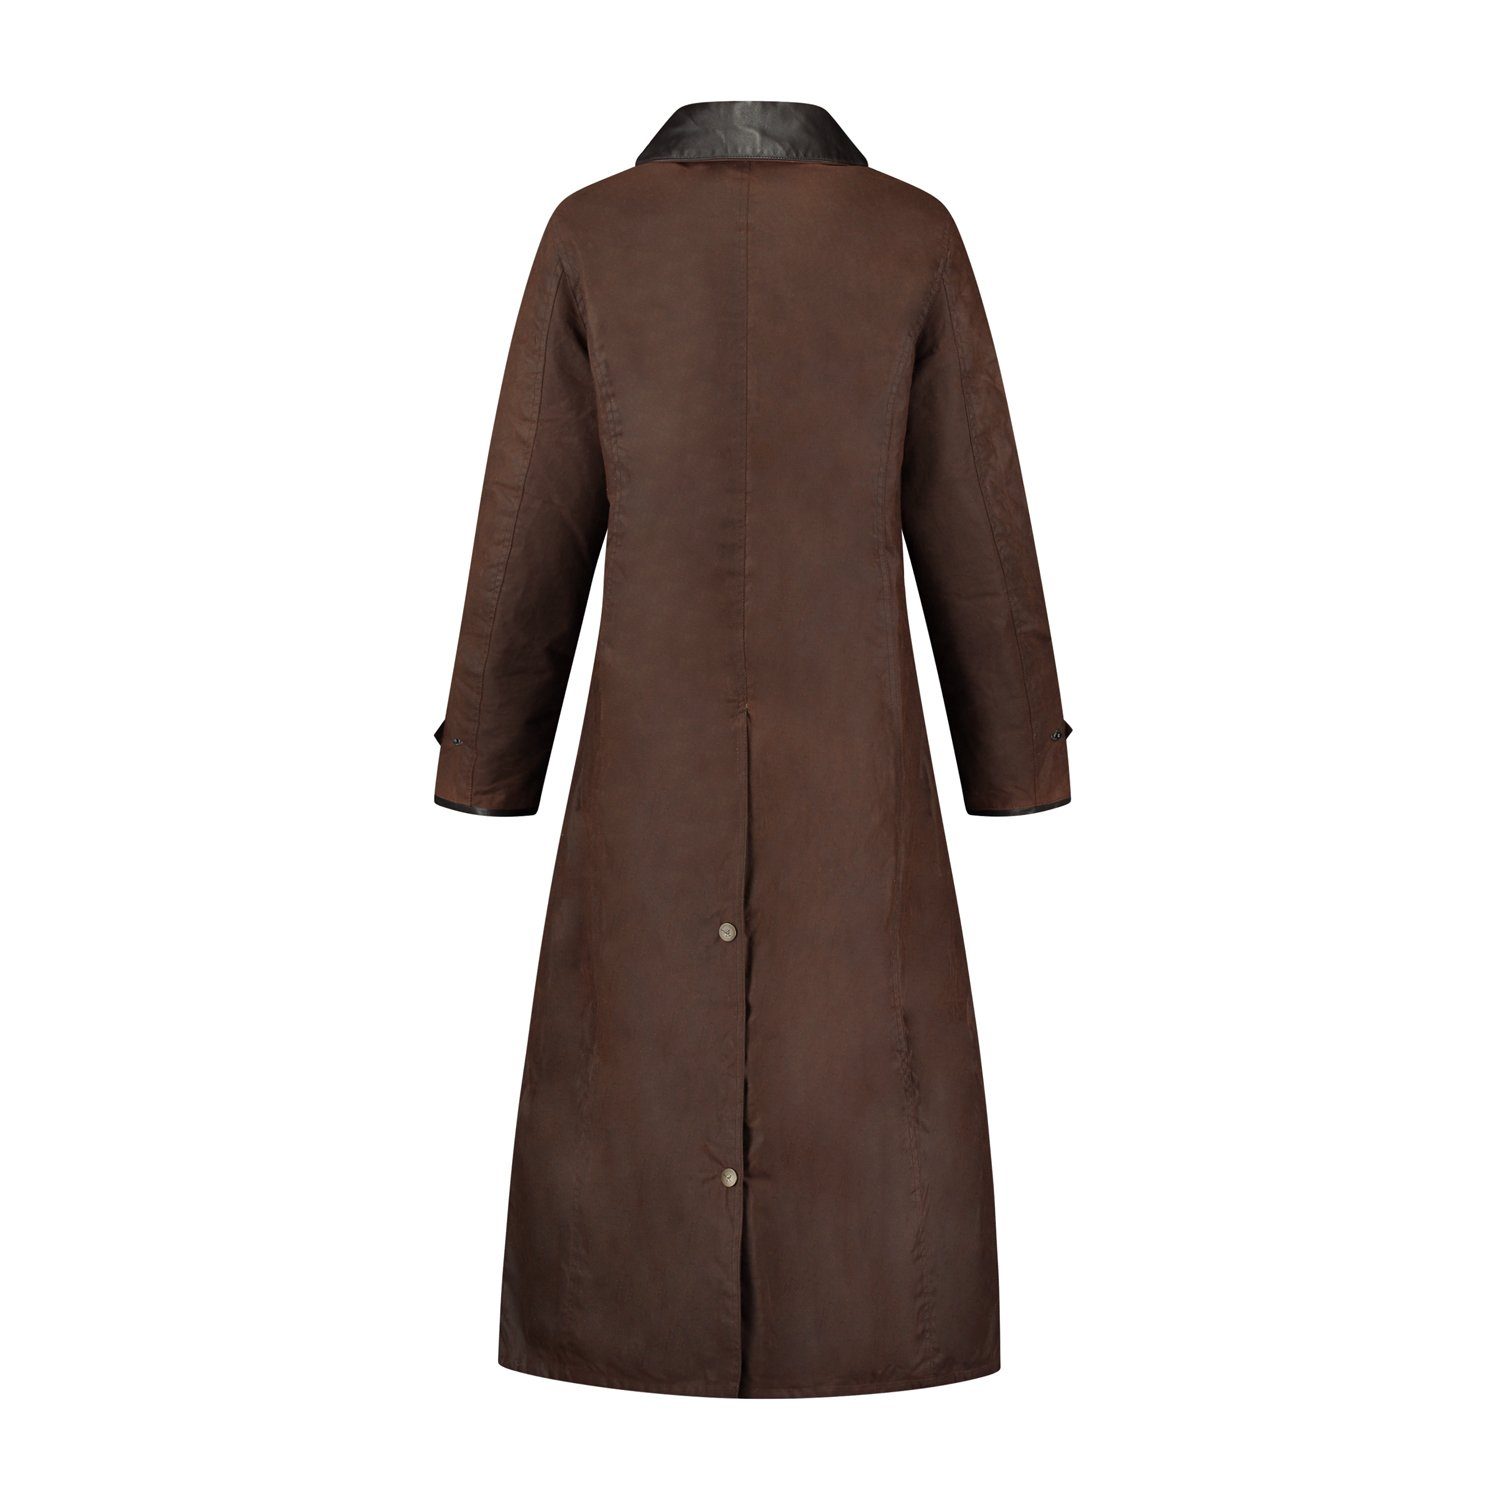 MGO Outdoorjacke Long Coat und Braun winddicht Wax Jane Lady wasserabweisend